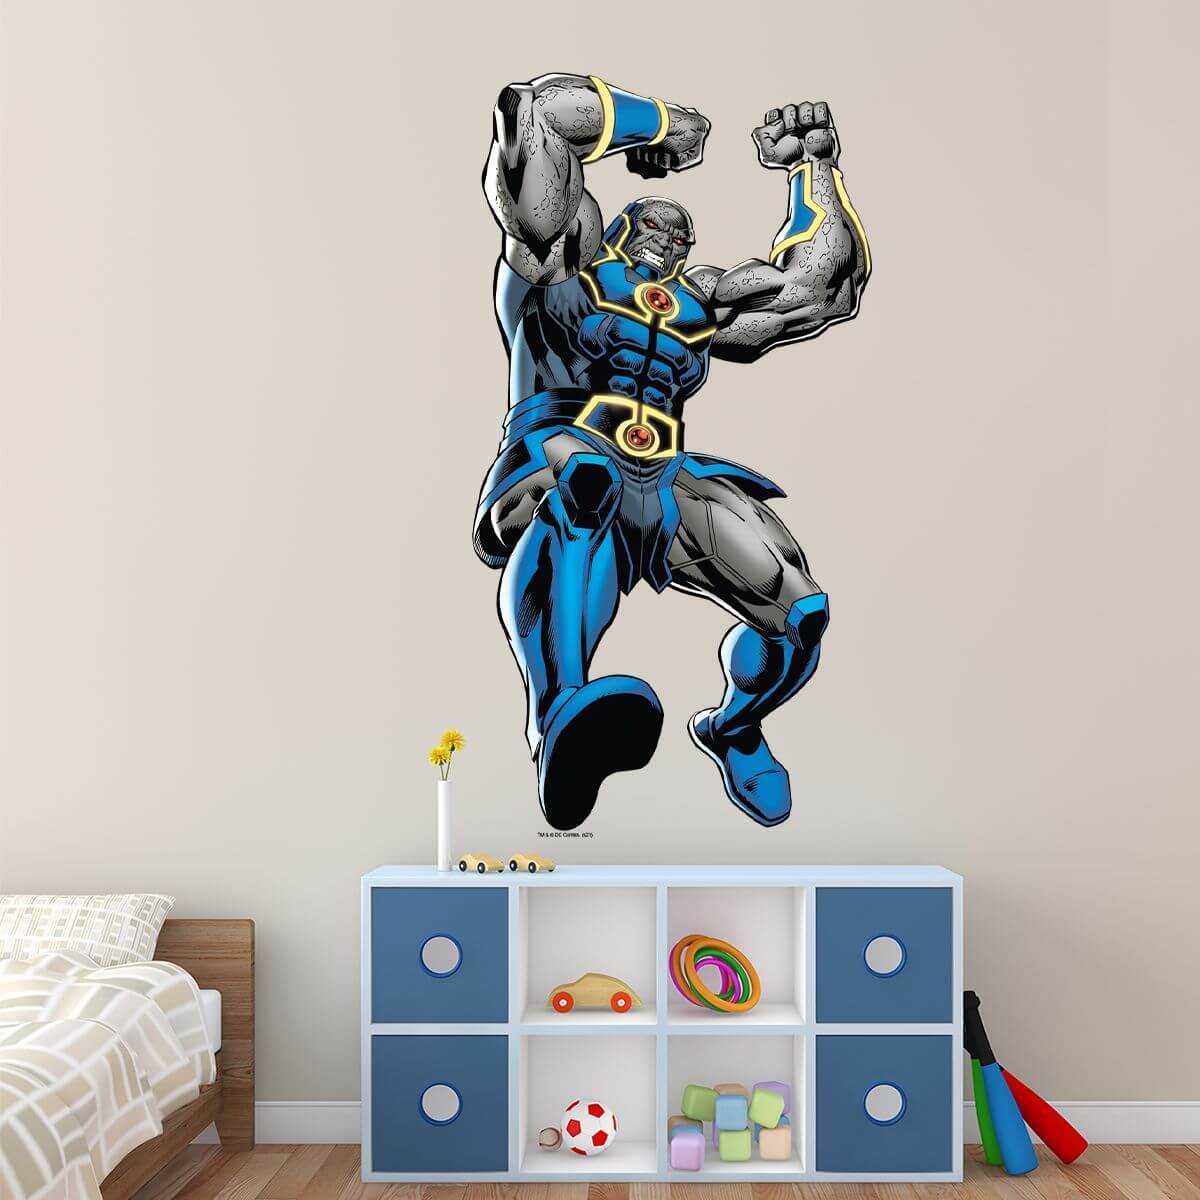 Kismet Decals Darkseid Dark God Licensed Wall Sticker - Easy DIY Justice League Home & Room Decor Wall Art - Kismet Decals